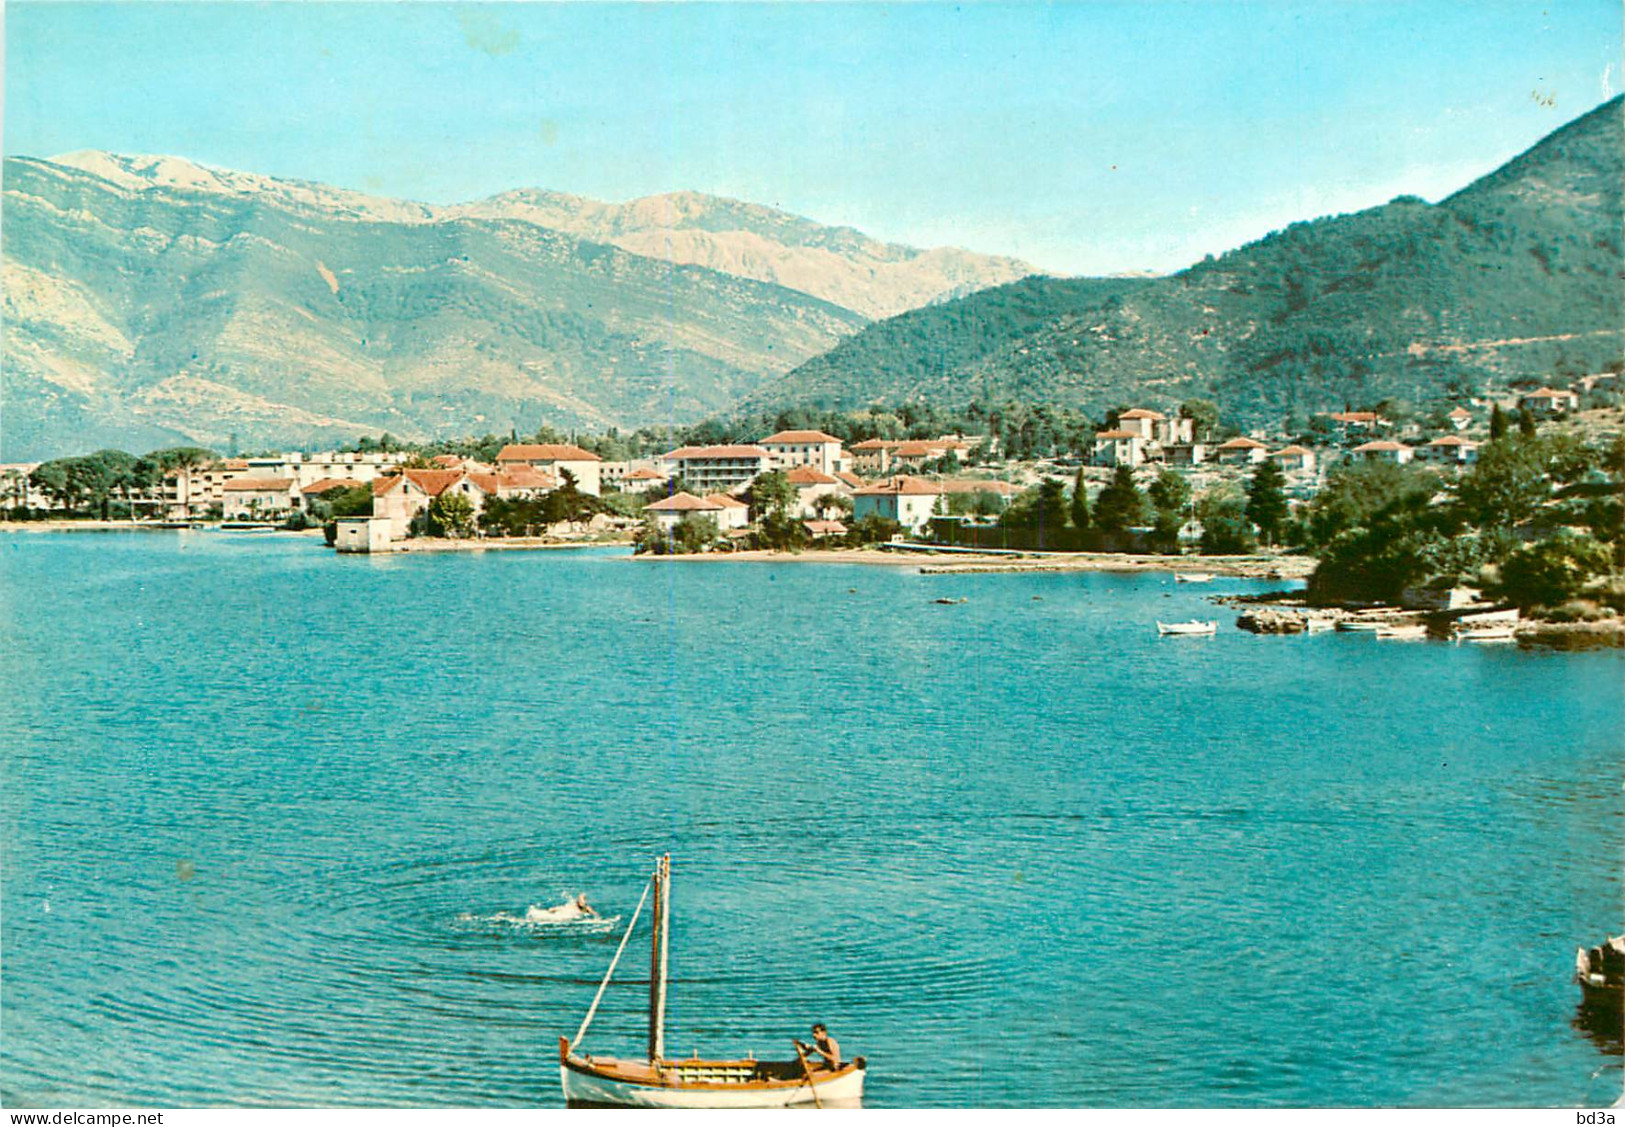  MONTENEGRO  TIVAT - Montenegro